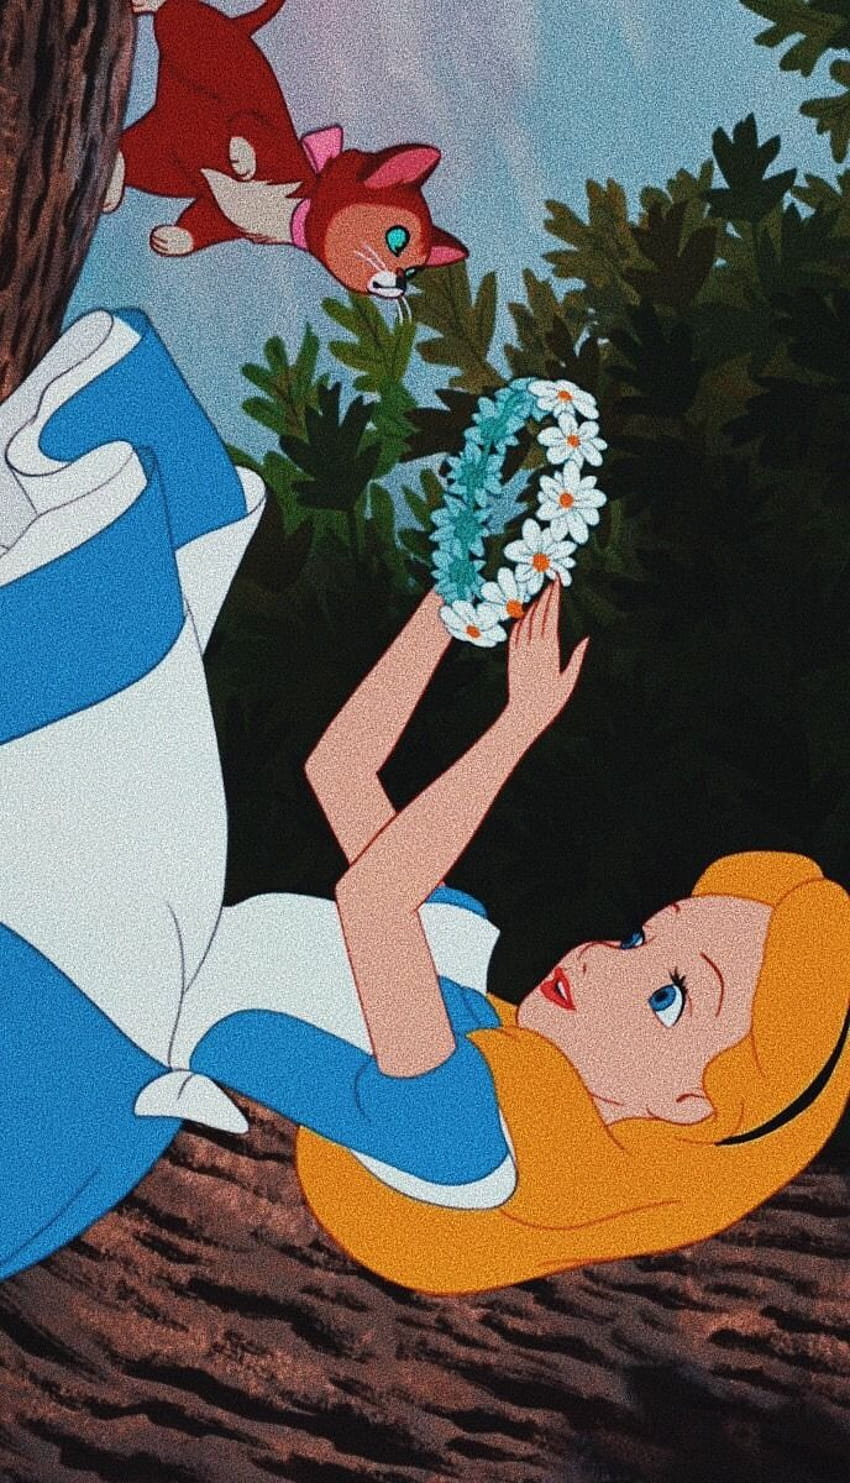 Trippy Alice In Wonderland Wallpaper 56 images